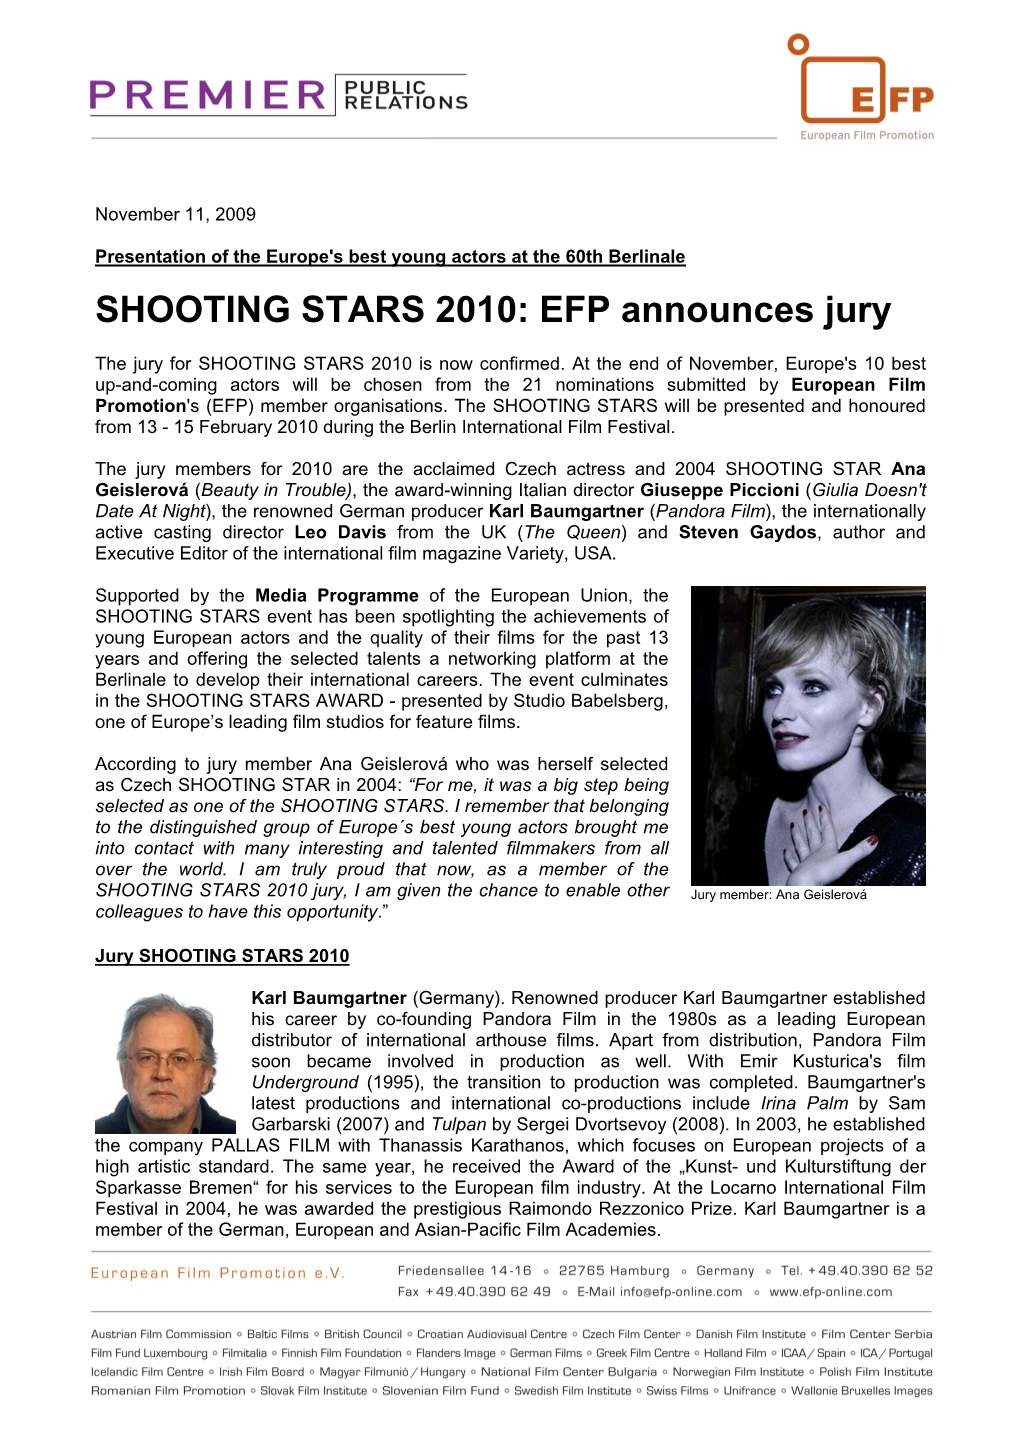 SHOOTING STARS 2010: EFP Announces Jury